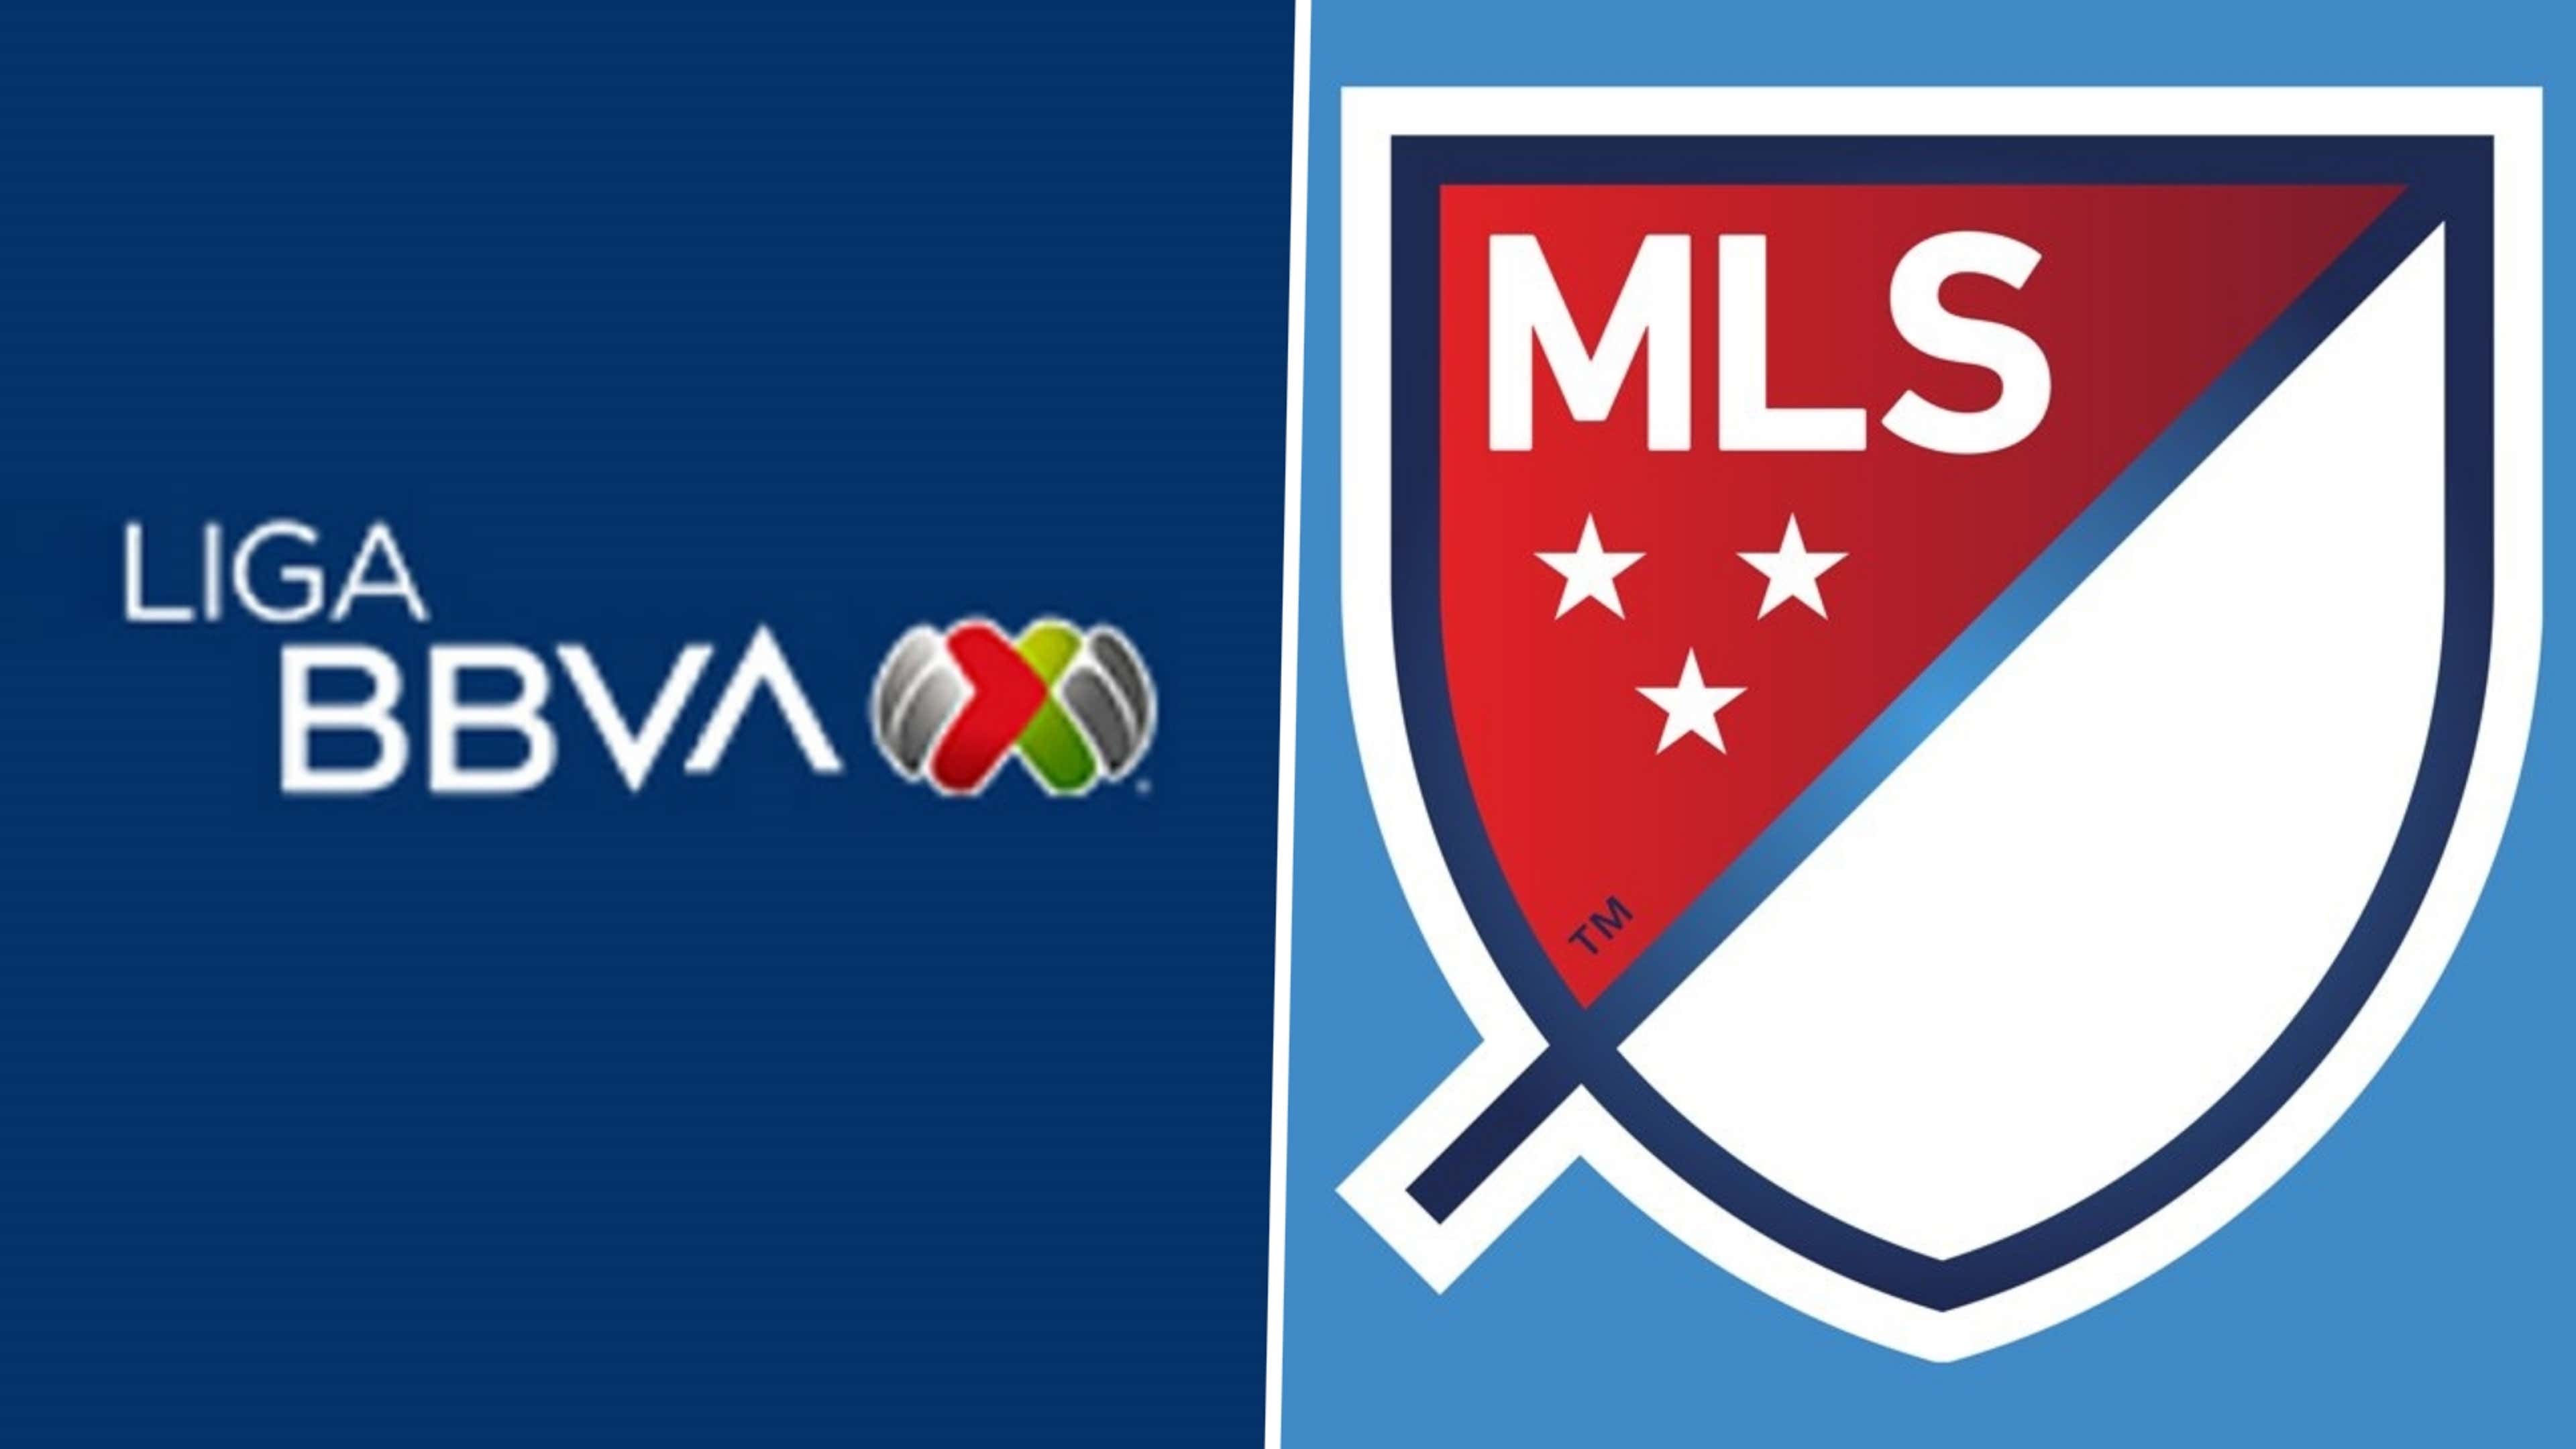 Messi vs LIGA MX and MLS teams